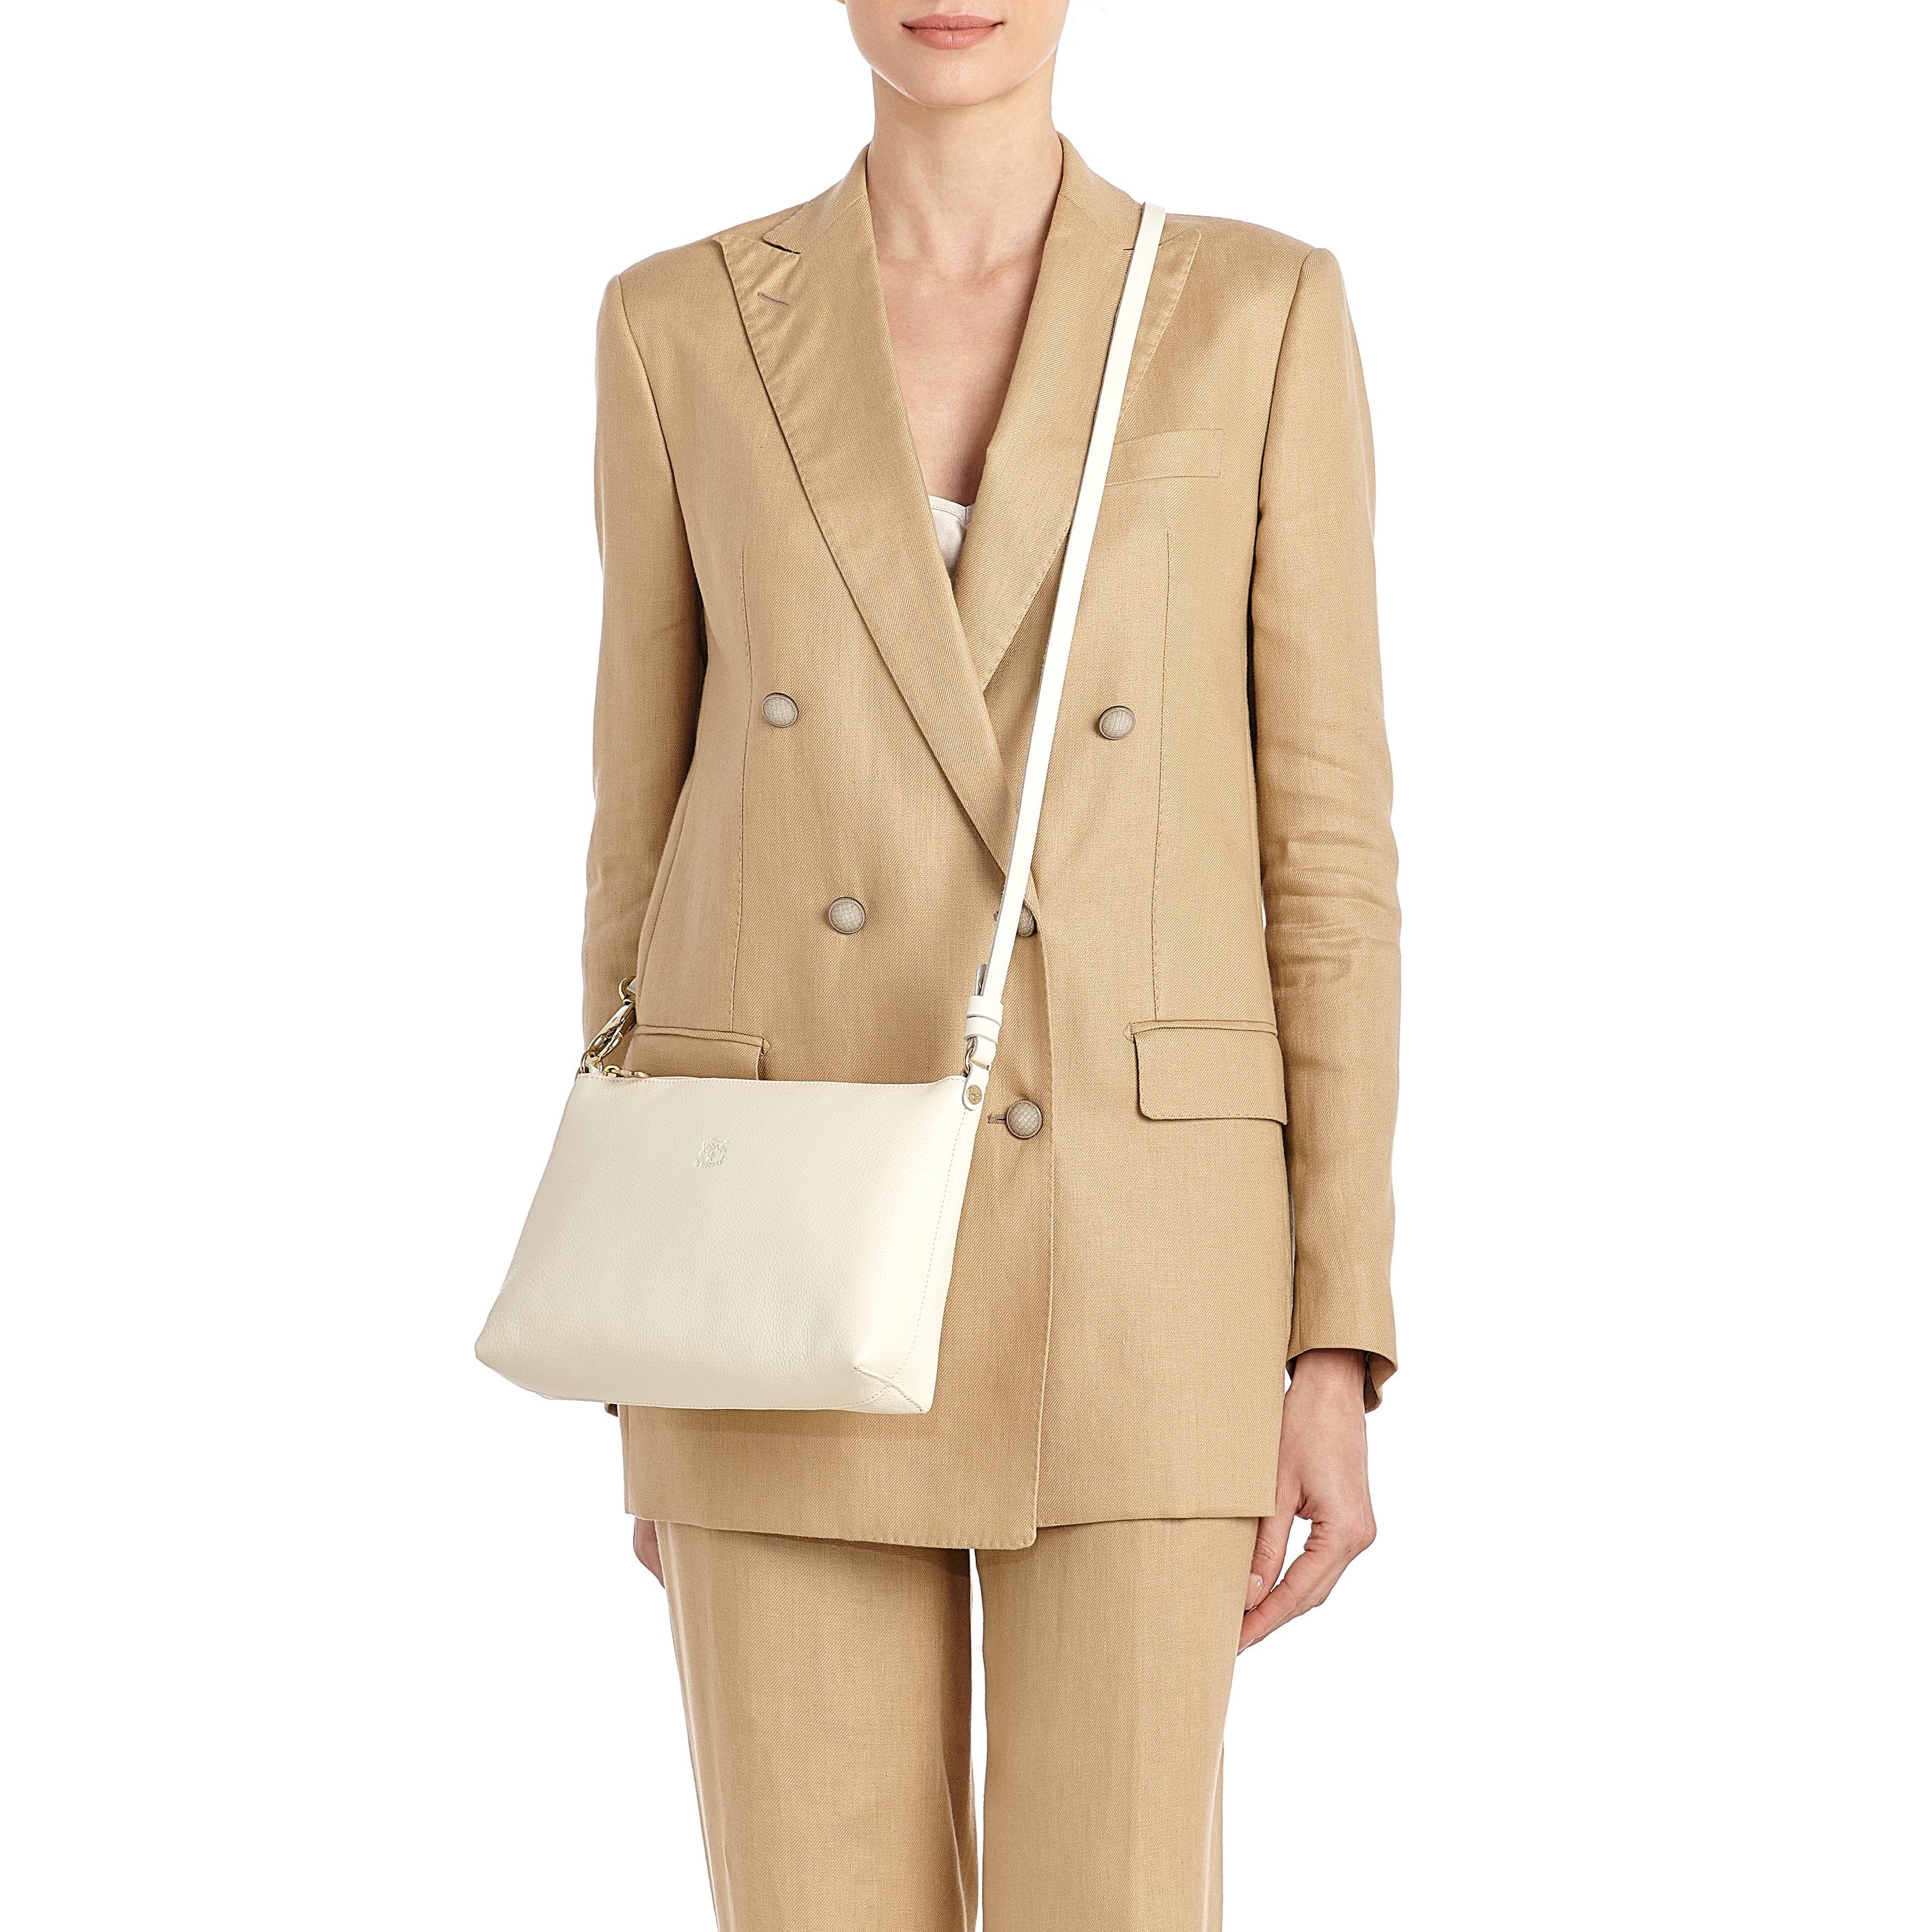 Salina | Women's shoulder bag in leather color white